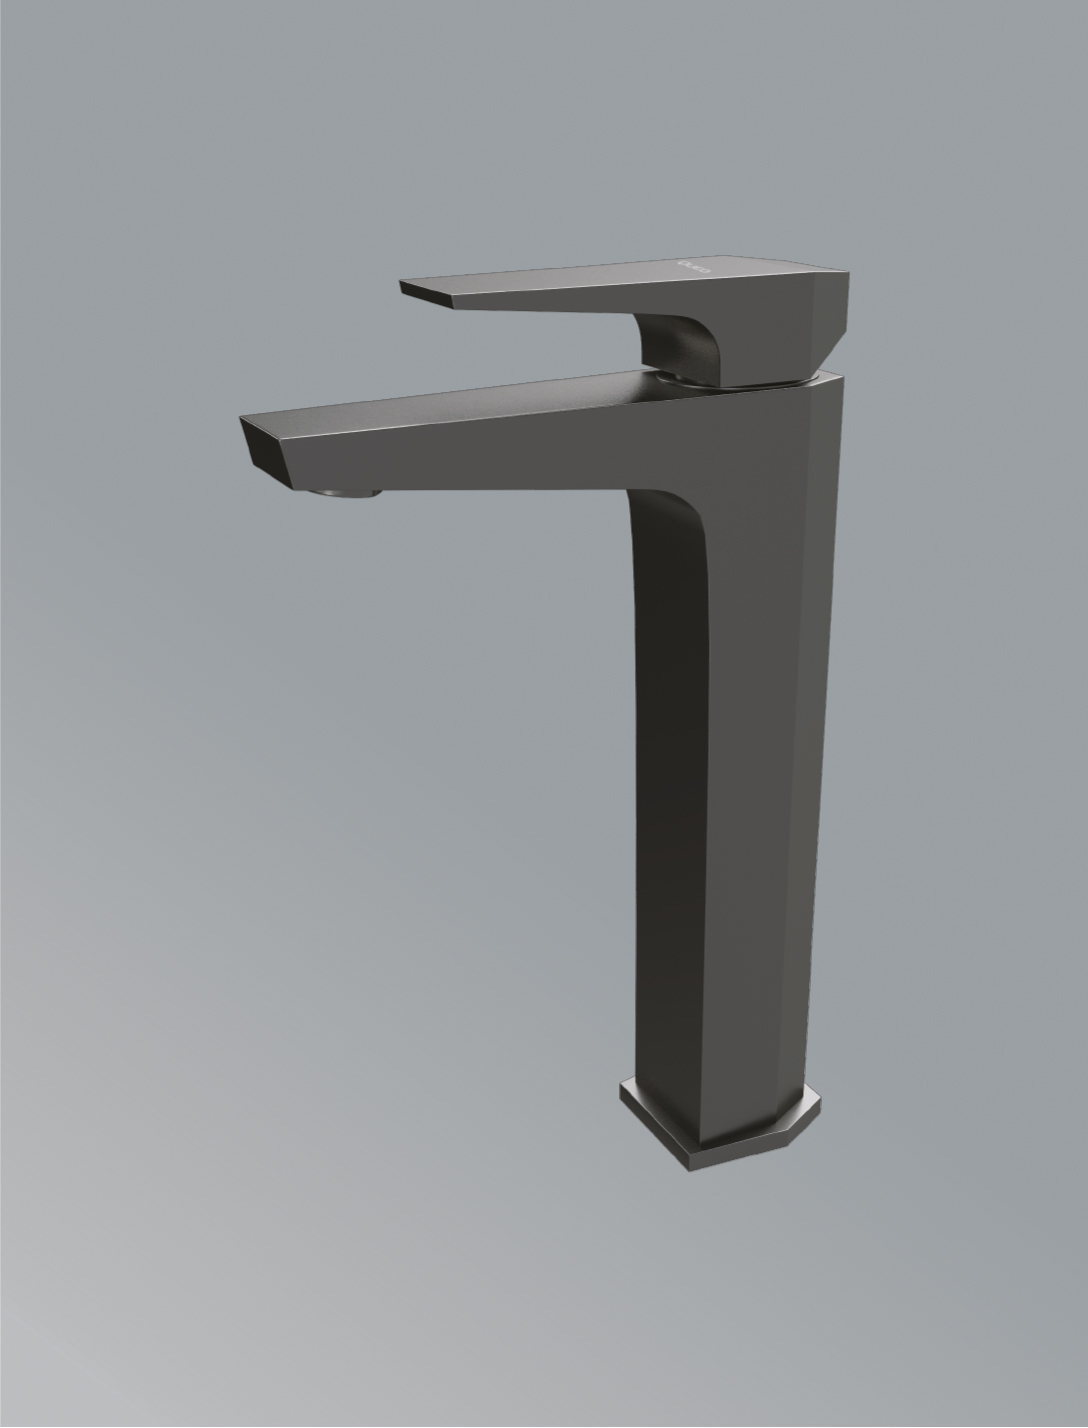  Single Control basin faucet tall in gun grey